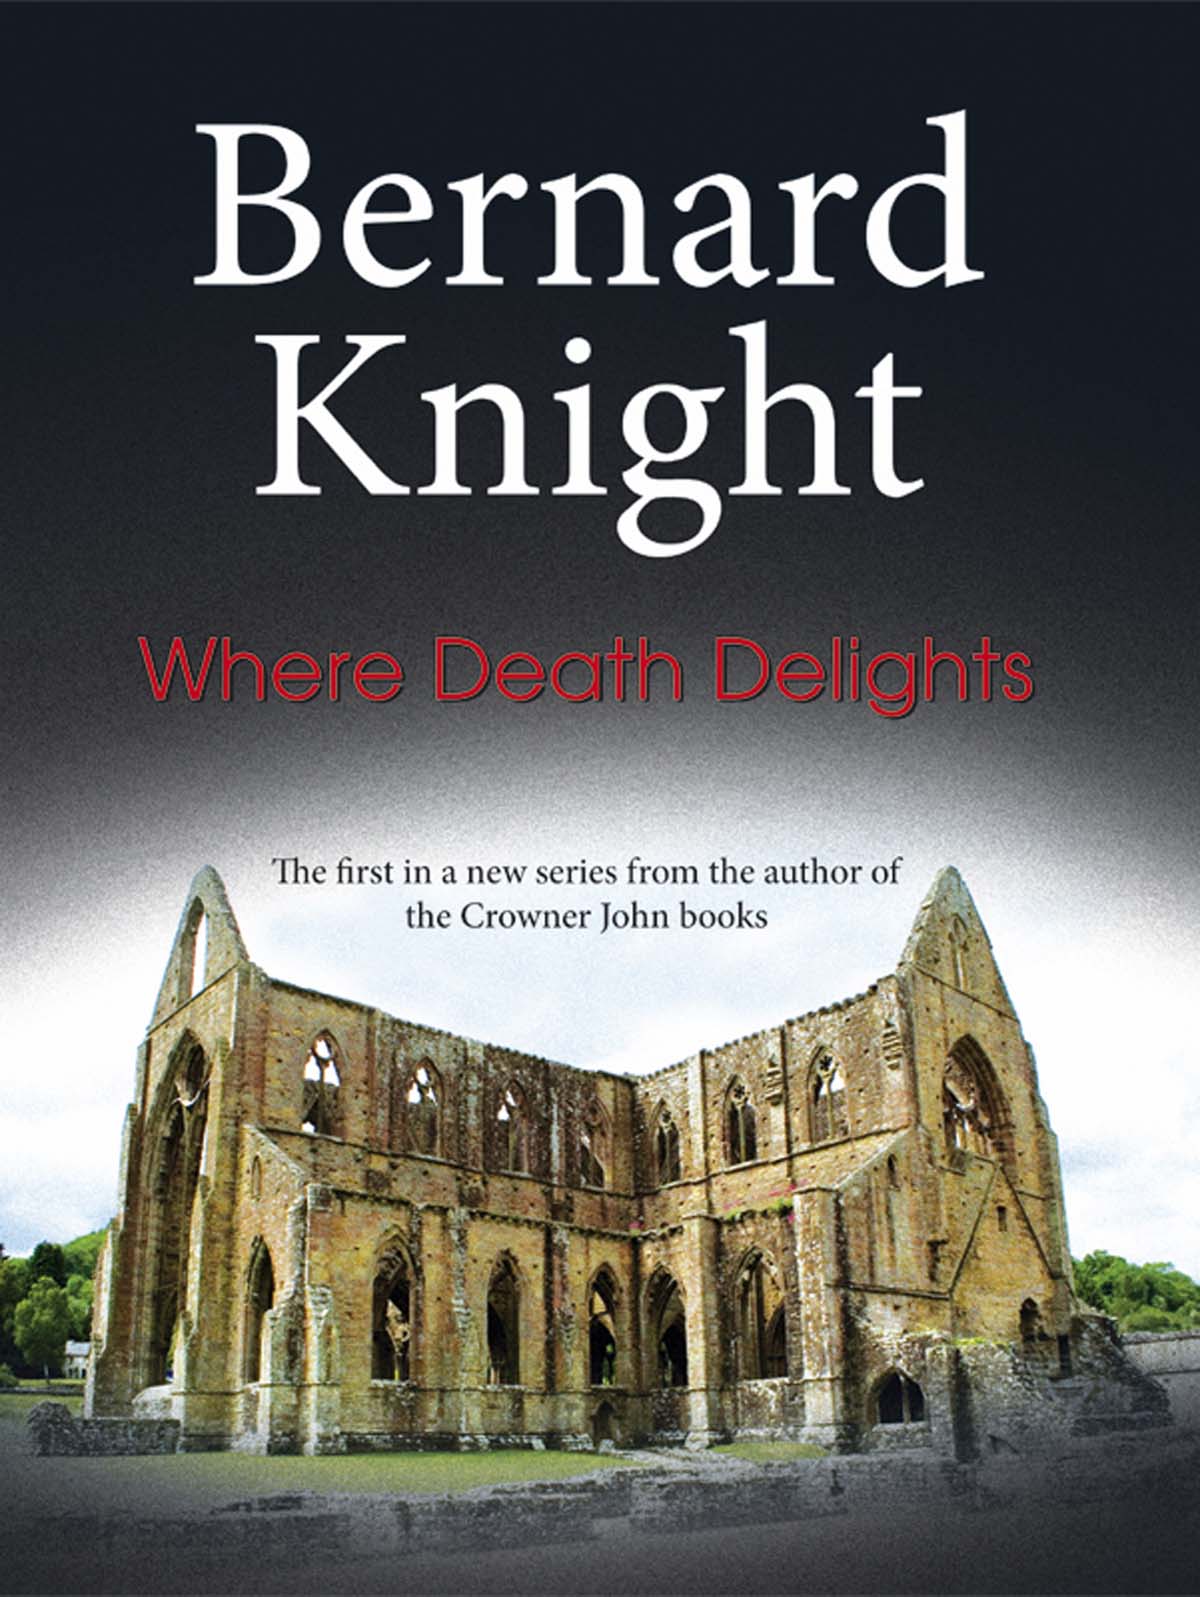 Where Death Delights (2010) by Bernard Knight